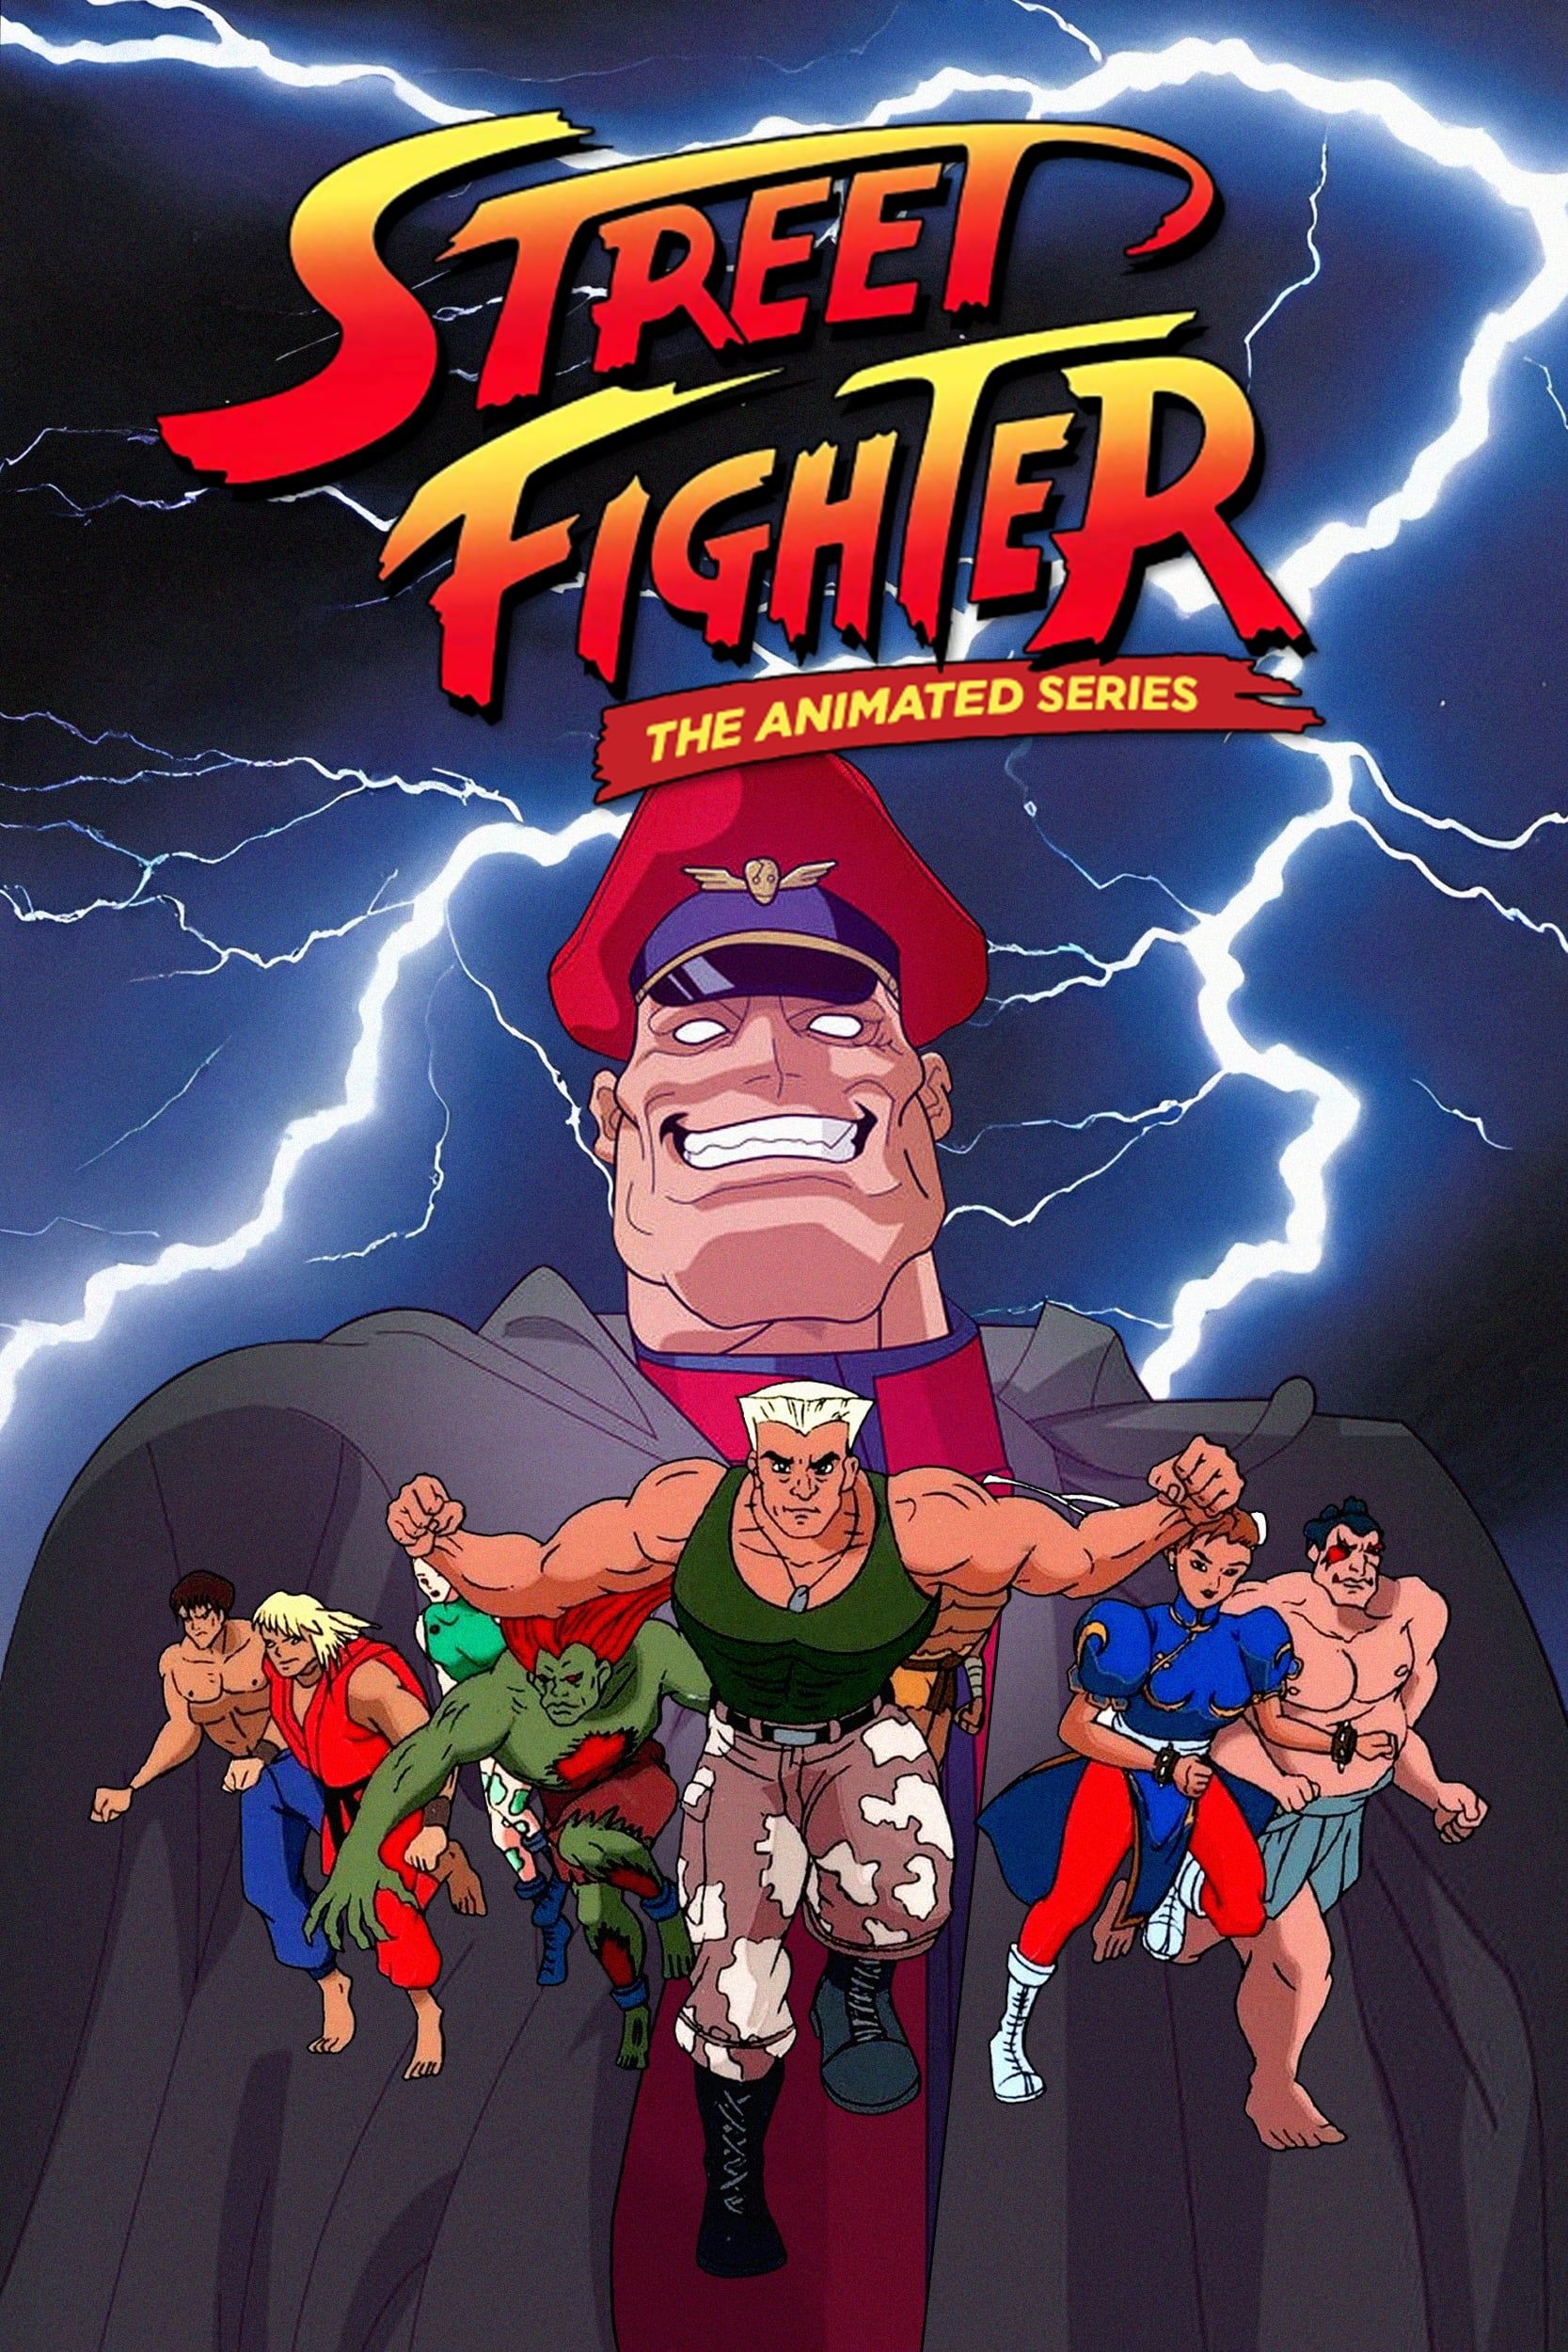 Street Fighter (TV series) - Wikipedia